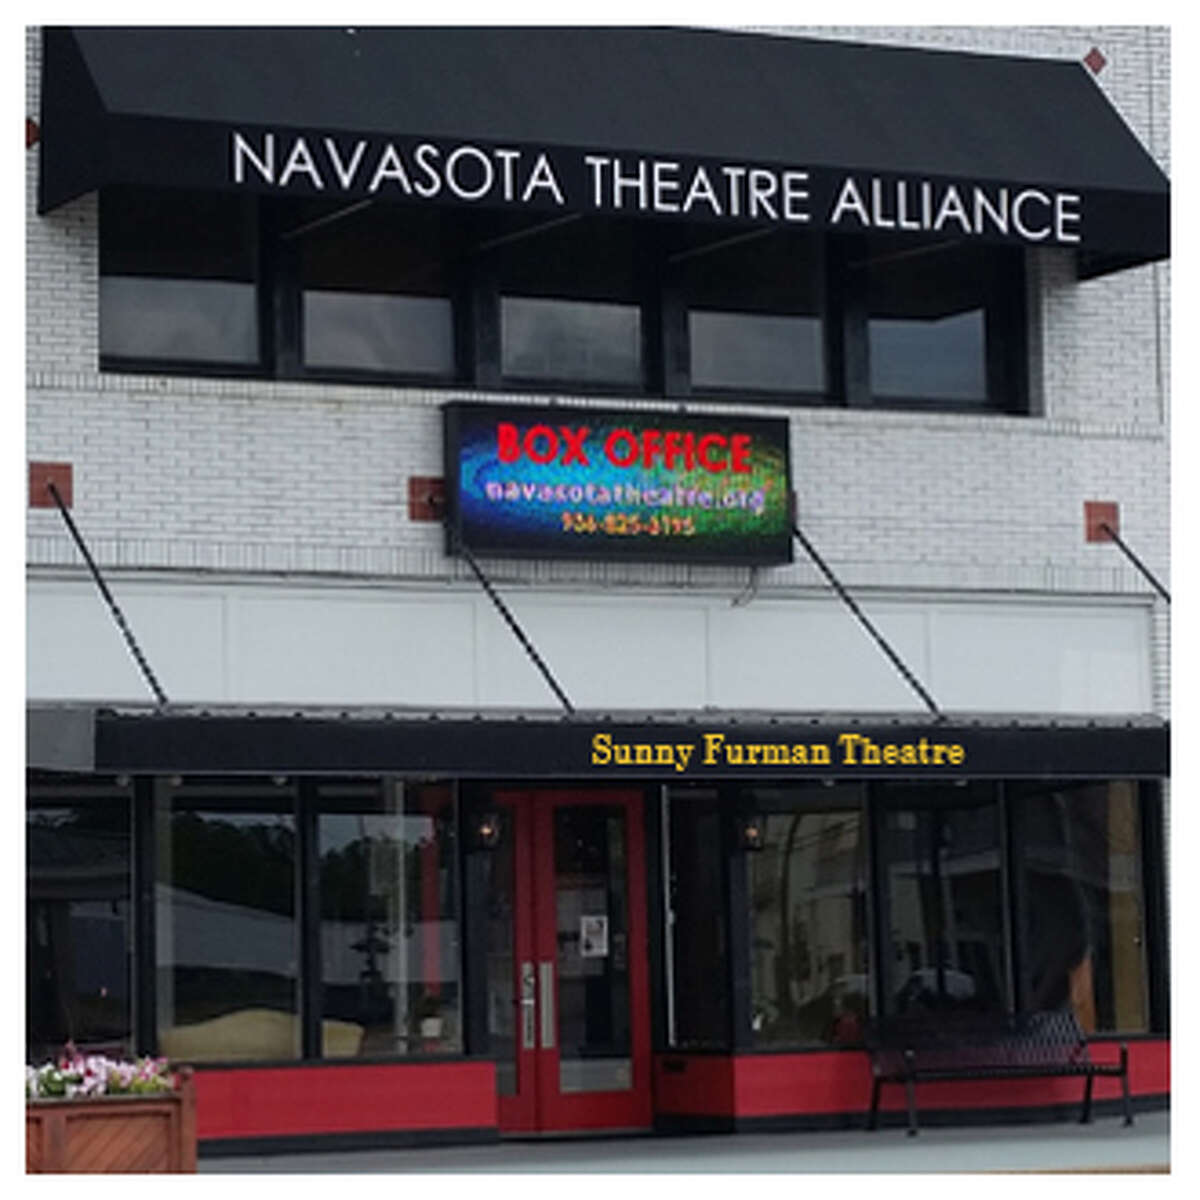 Navasota Theatre Allianceâs board president Sheryl Brown announces the nonprofit live community theatreâs 2018 season which opens Feb. 9.